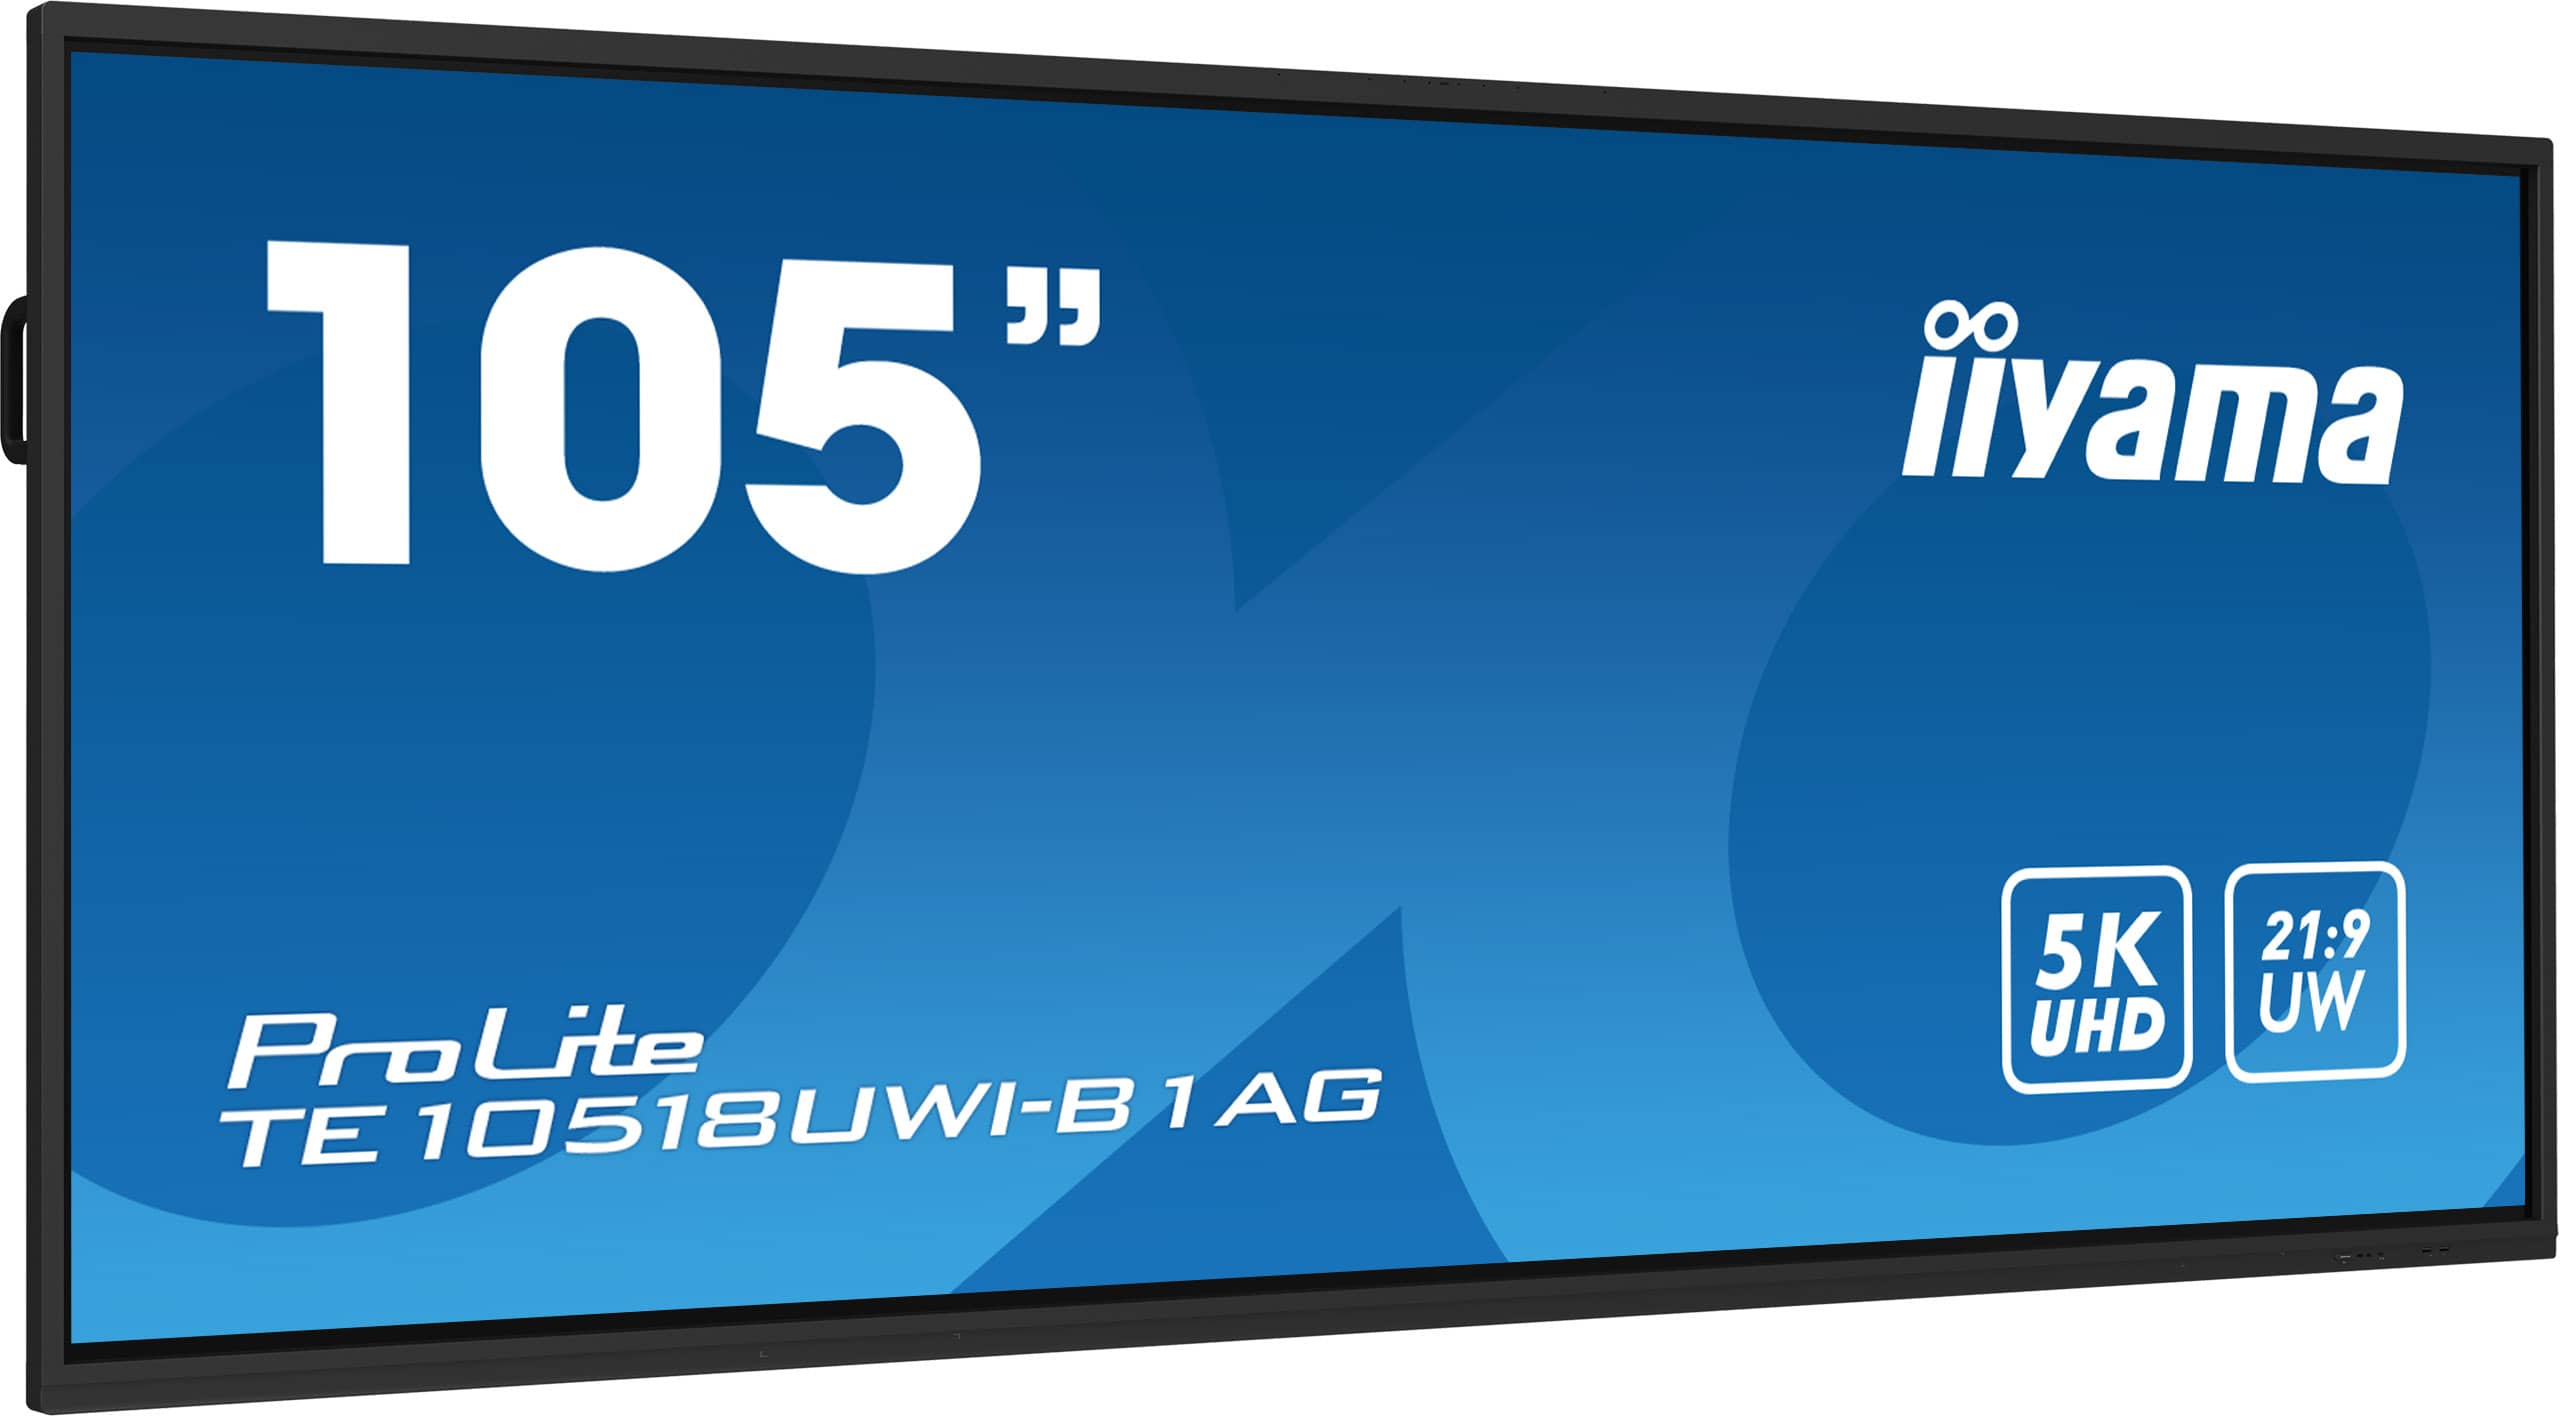 Iiyama ProLite TE10518UWI-B1AG | Interaktives 105" (᠎265.7 cm) Ultra-wide Multi-Touch-Display mit 5K UHD-Auflösung und 21:9-Panoramablick